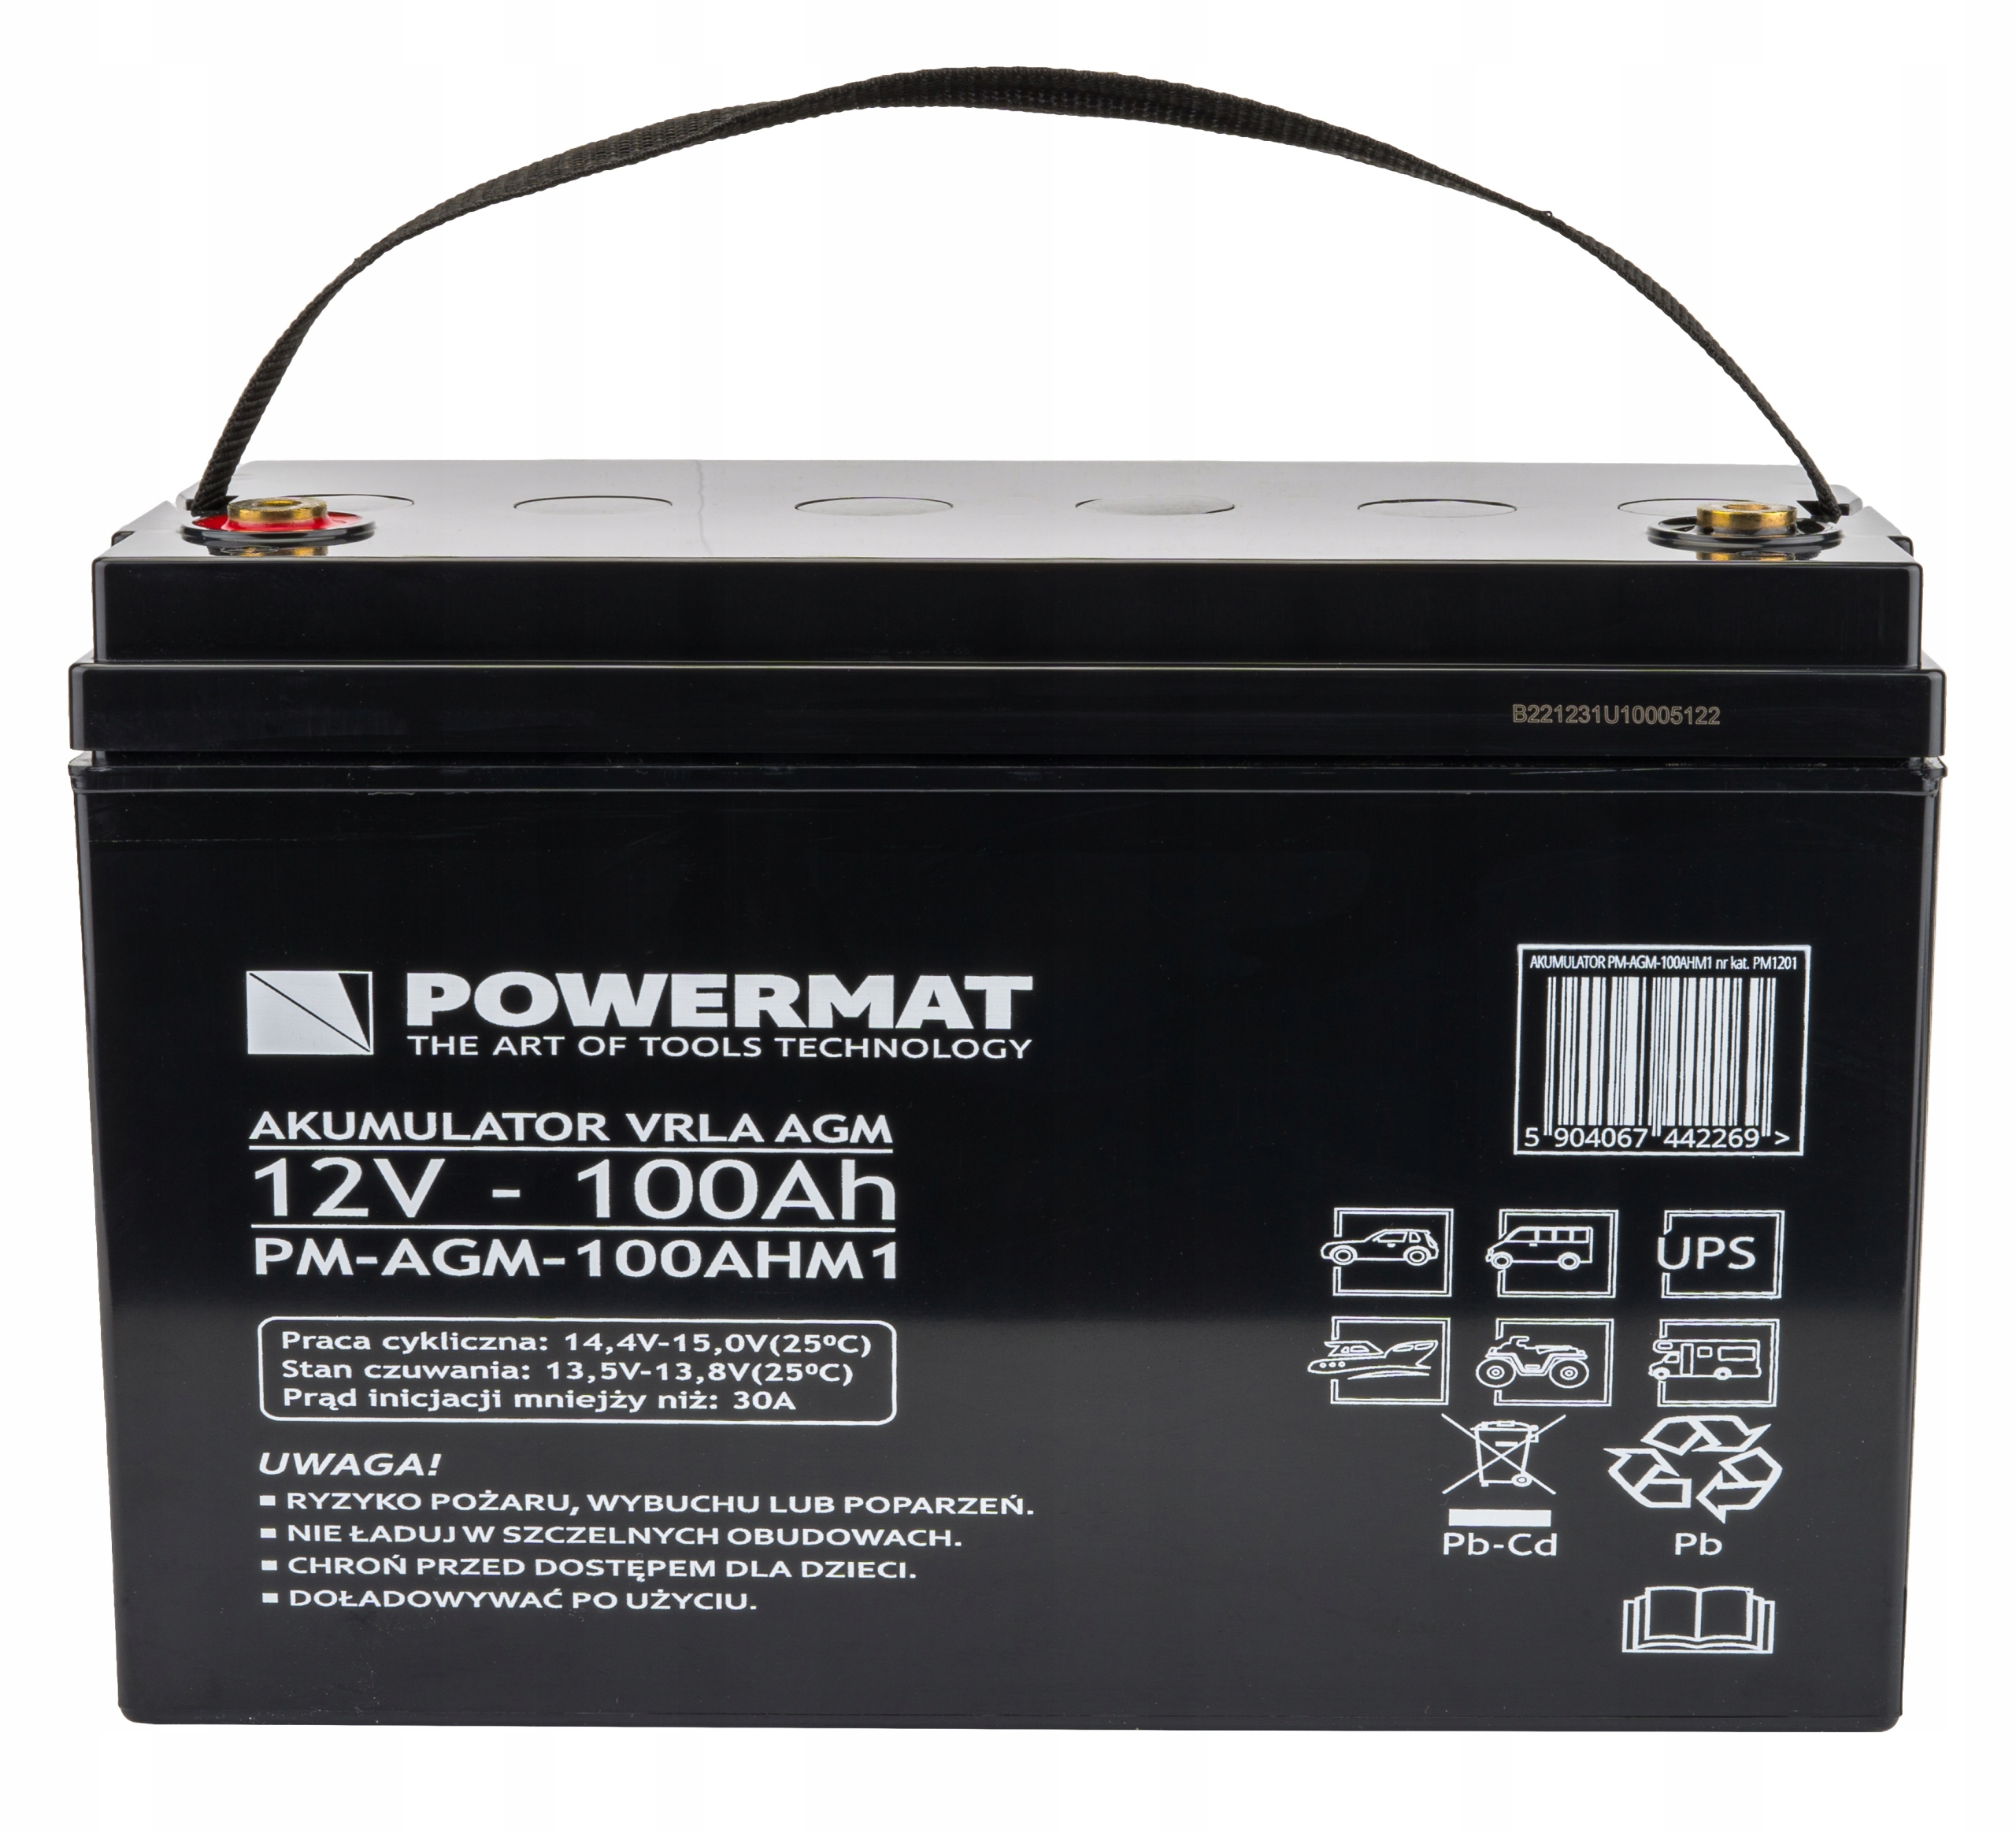 Akumulator VRLA AGM 12V 100Ah Bateria do UPS C10 Pojemność 100 Ah